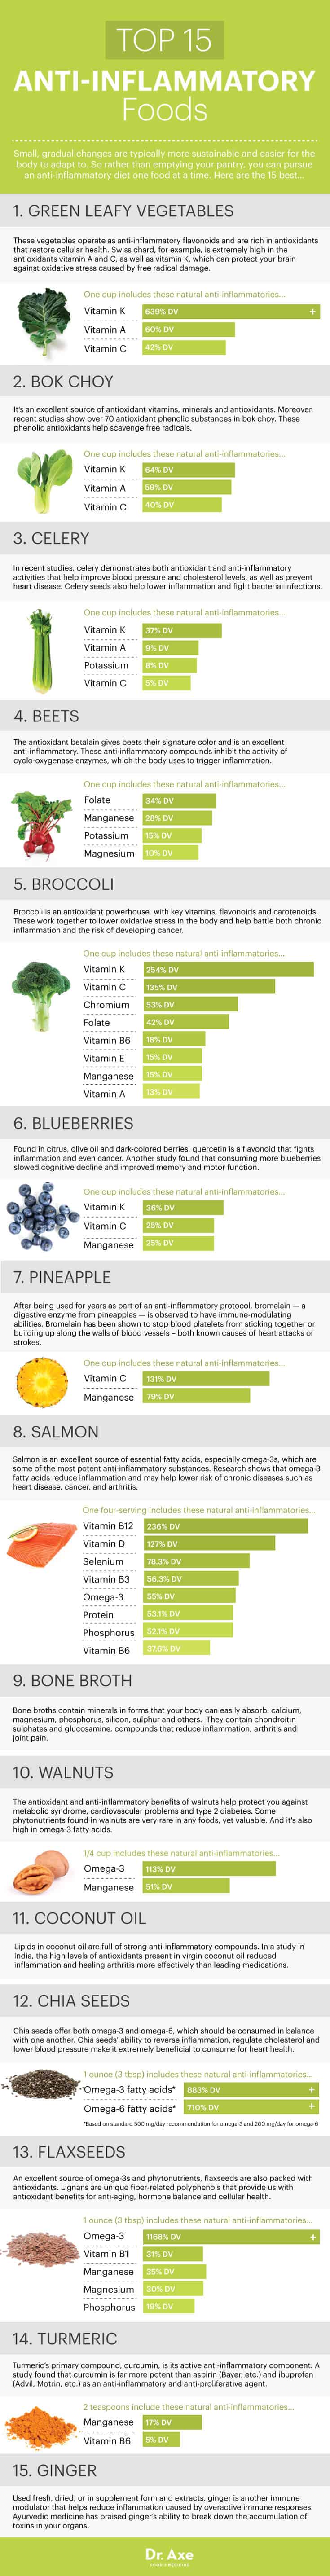 Top anti-inflammatory foods